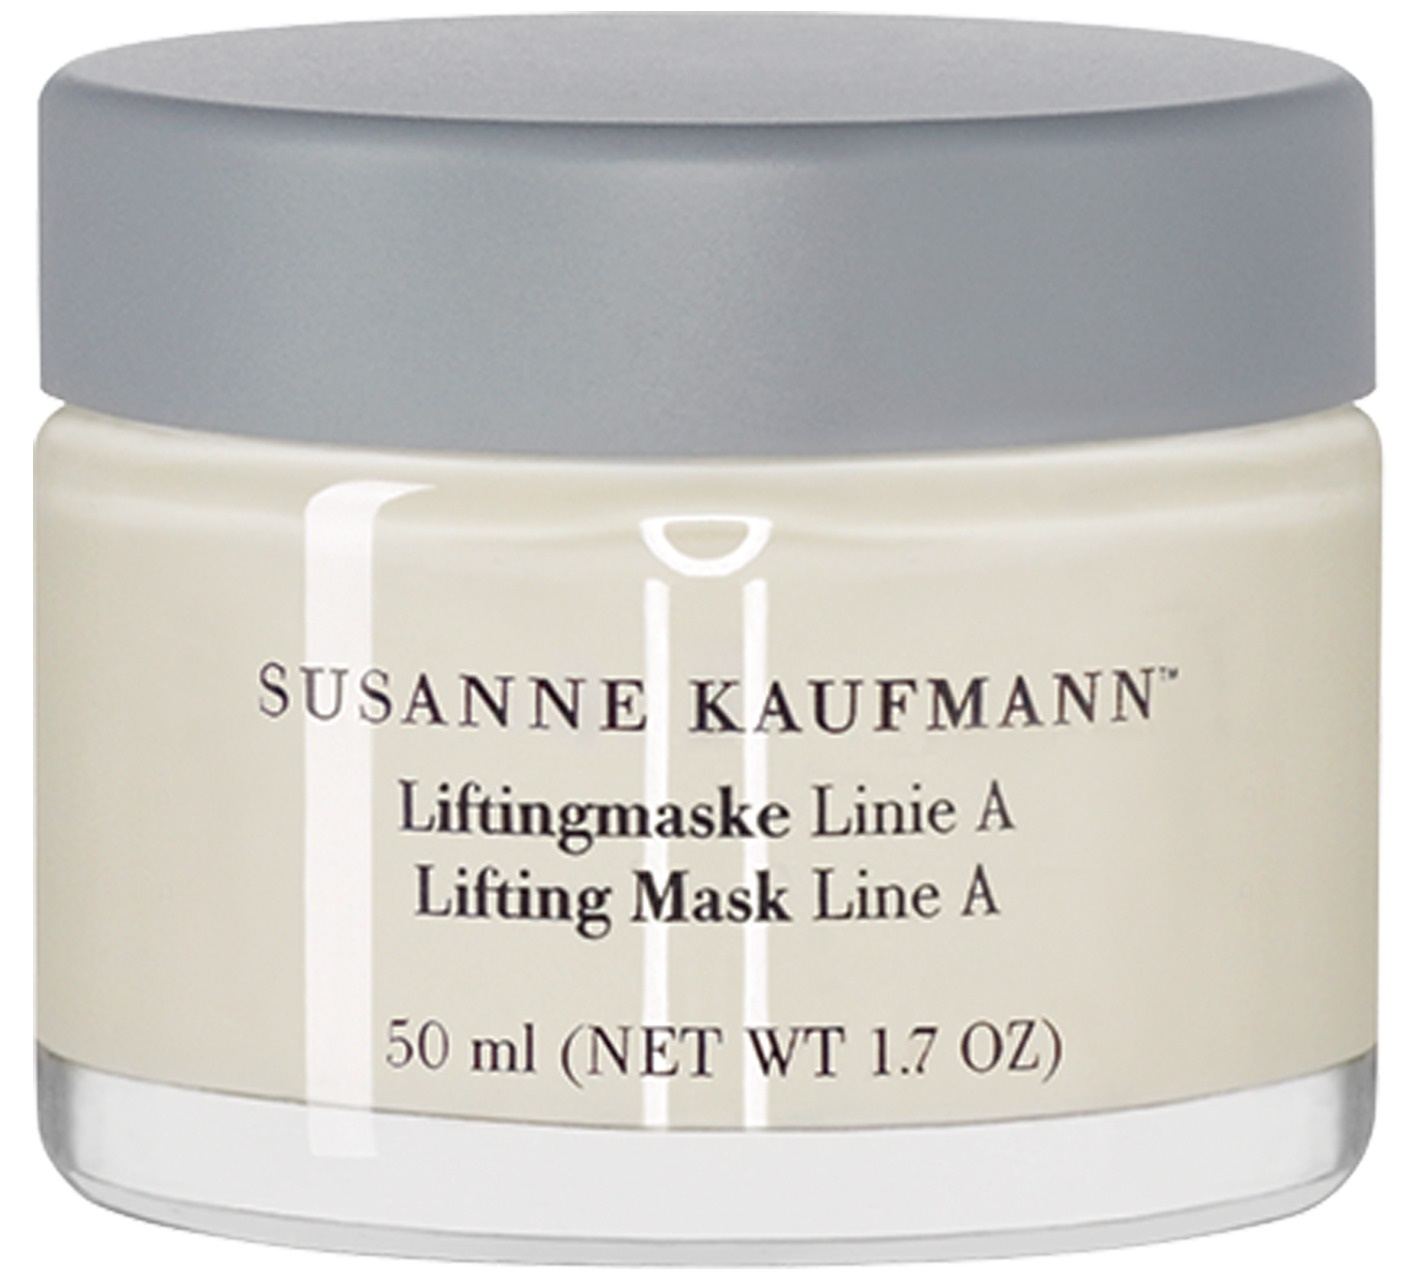 Susanne Kaufmann Lifting Mask Line A